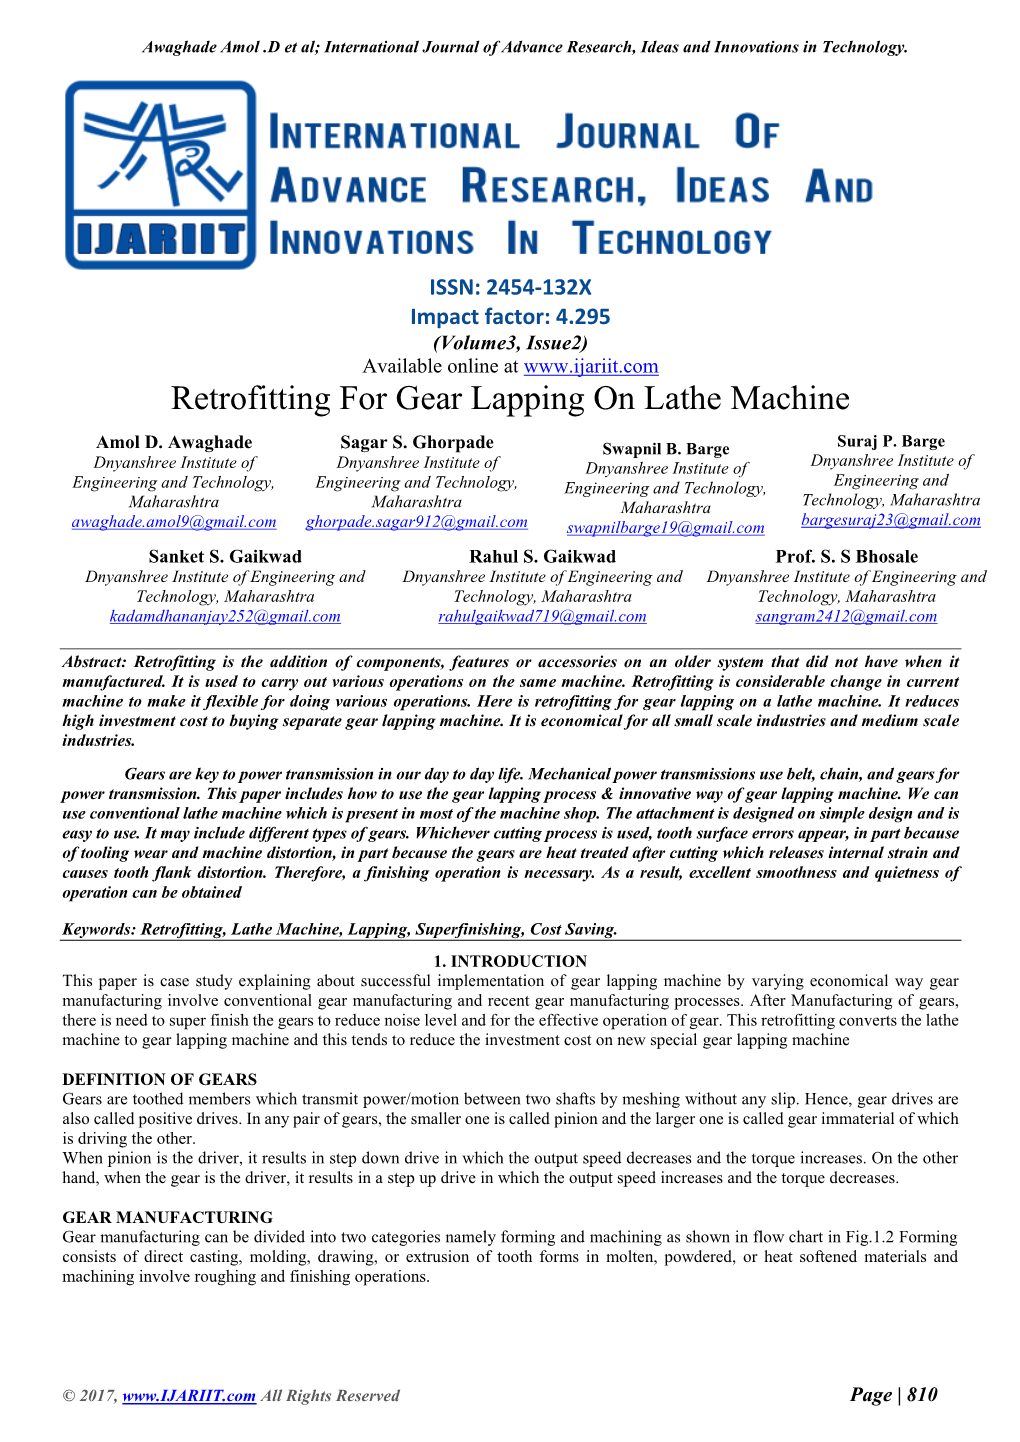 Retrofitting for Gear Lapping on Lathe Machine